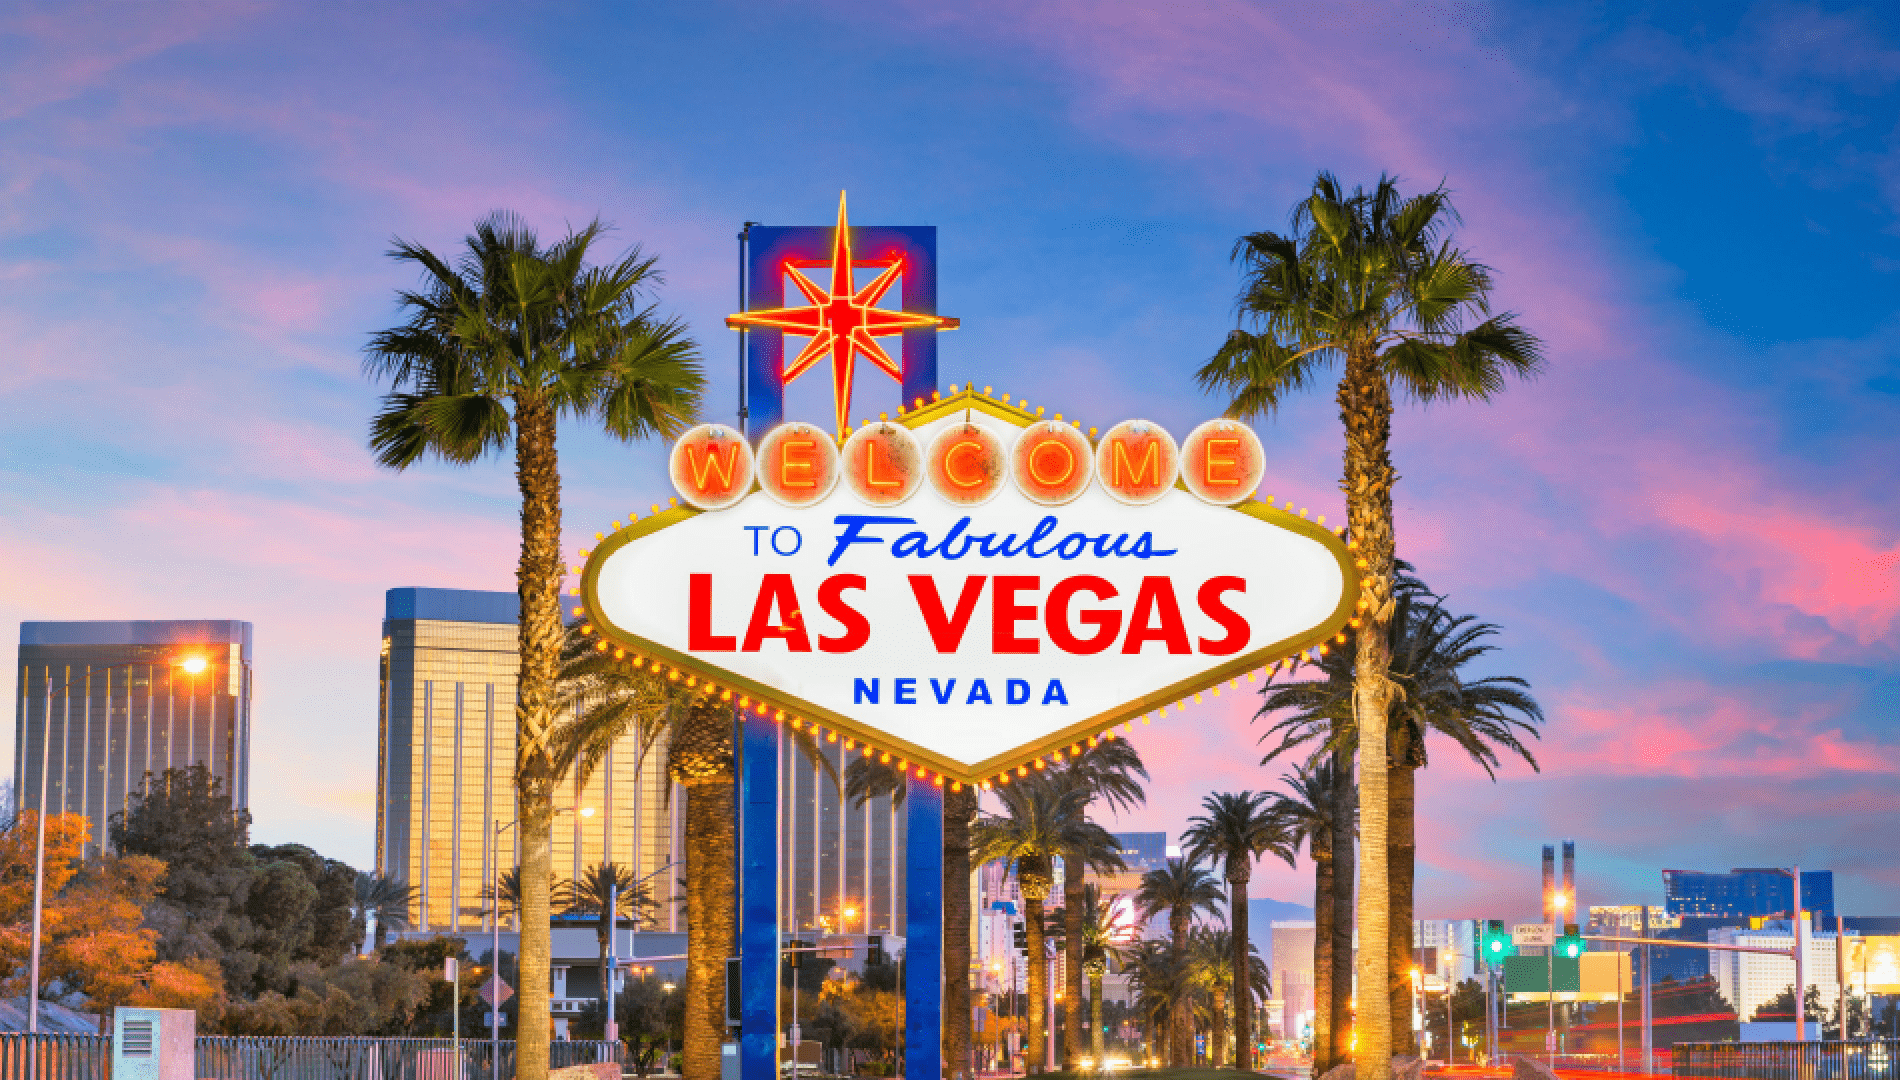 Las Vegas Casino Consumer Still in Strong Shape, Says Analyst